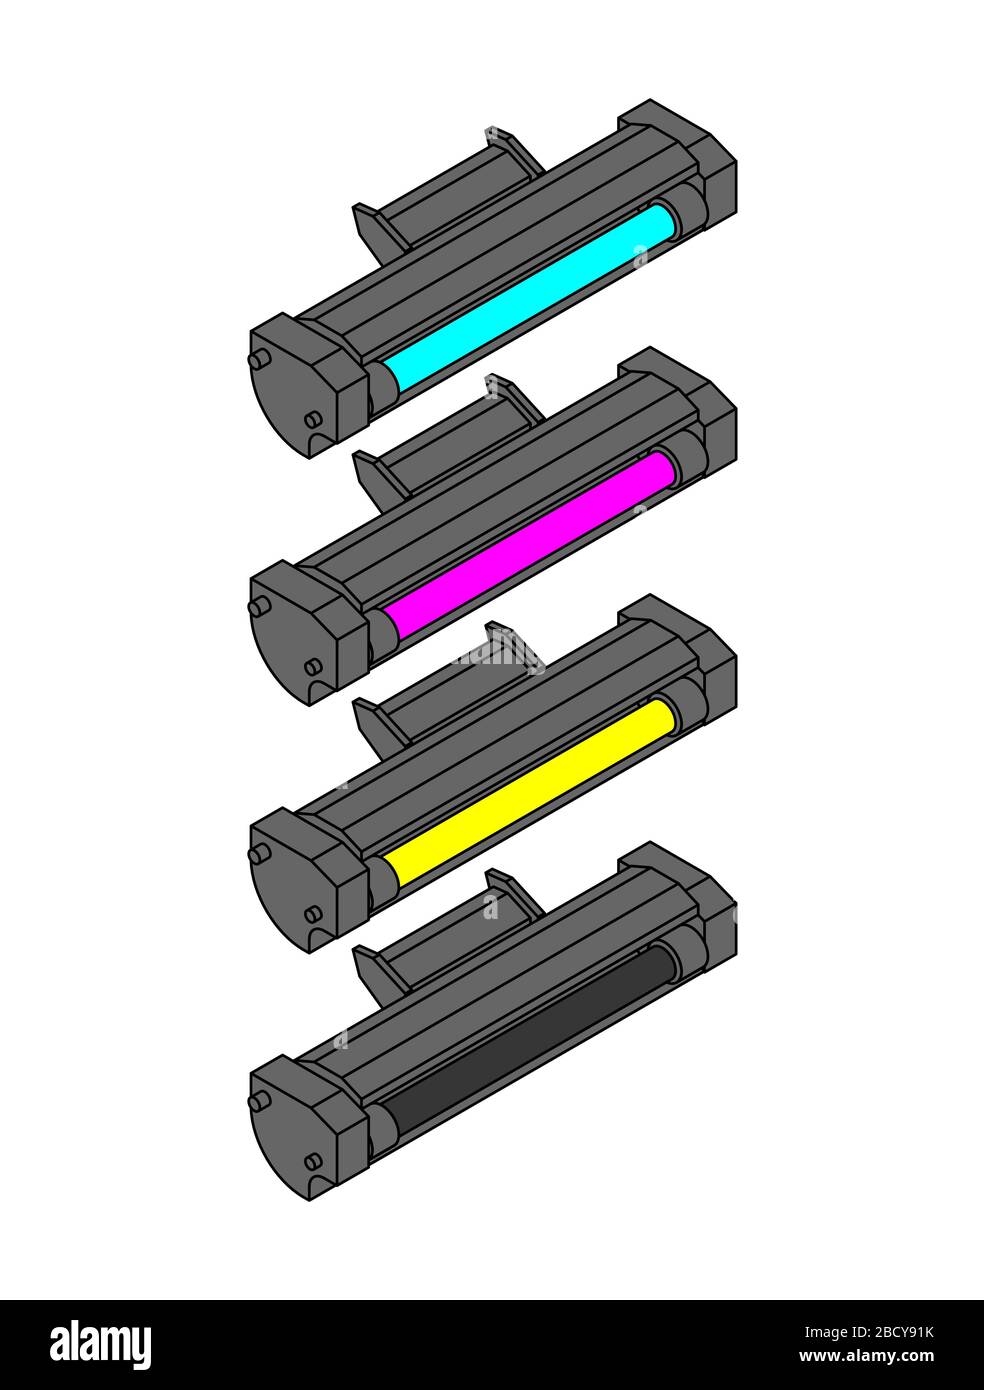 Printer toner cartridge CMYK set. Cyan and Magenta. Yellow and Key color. ink Laser Jet printer Stock Vector